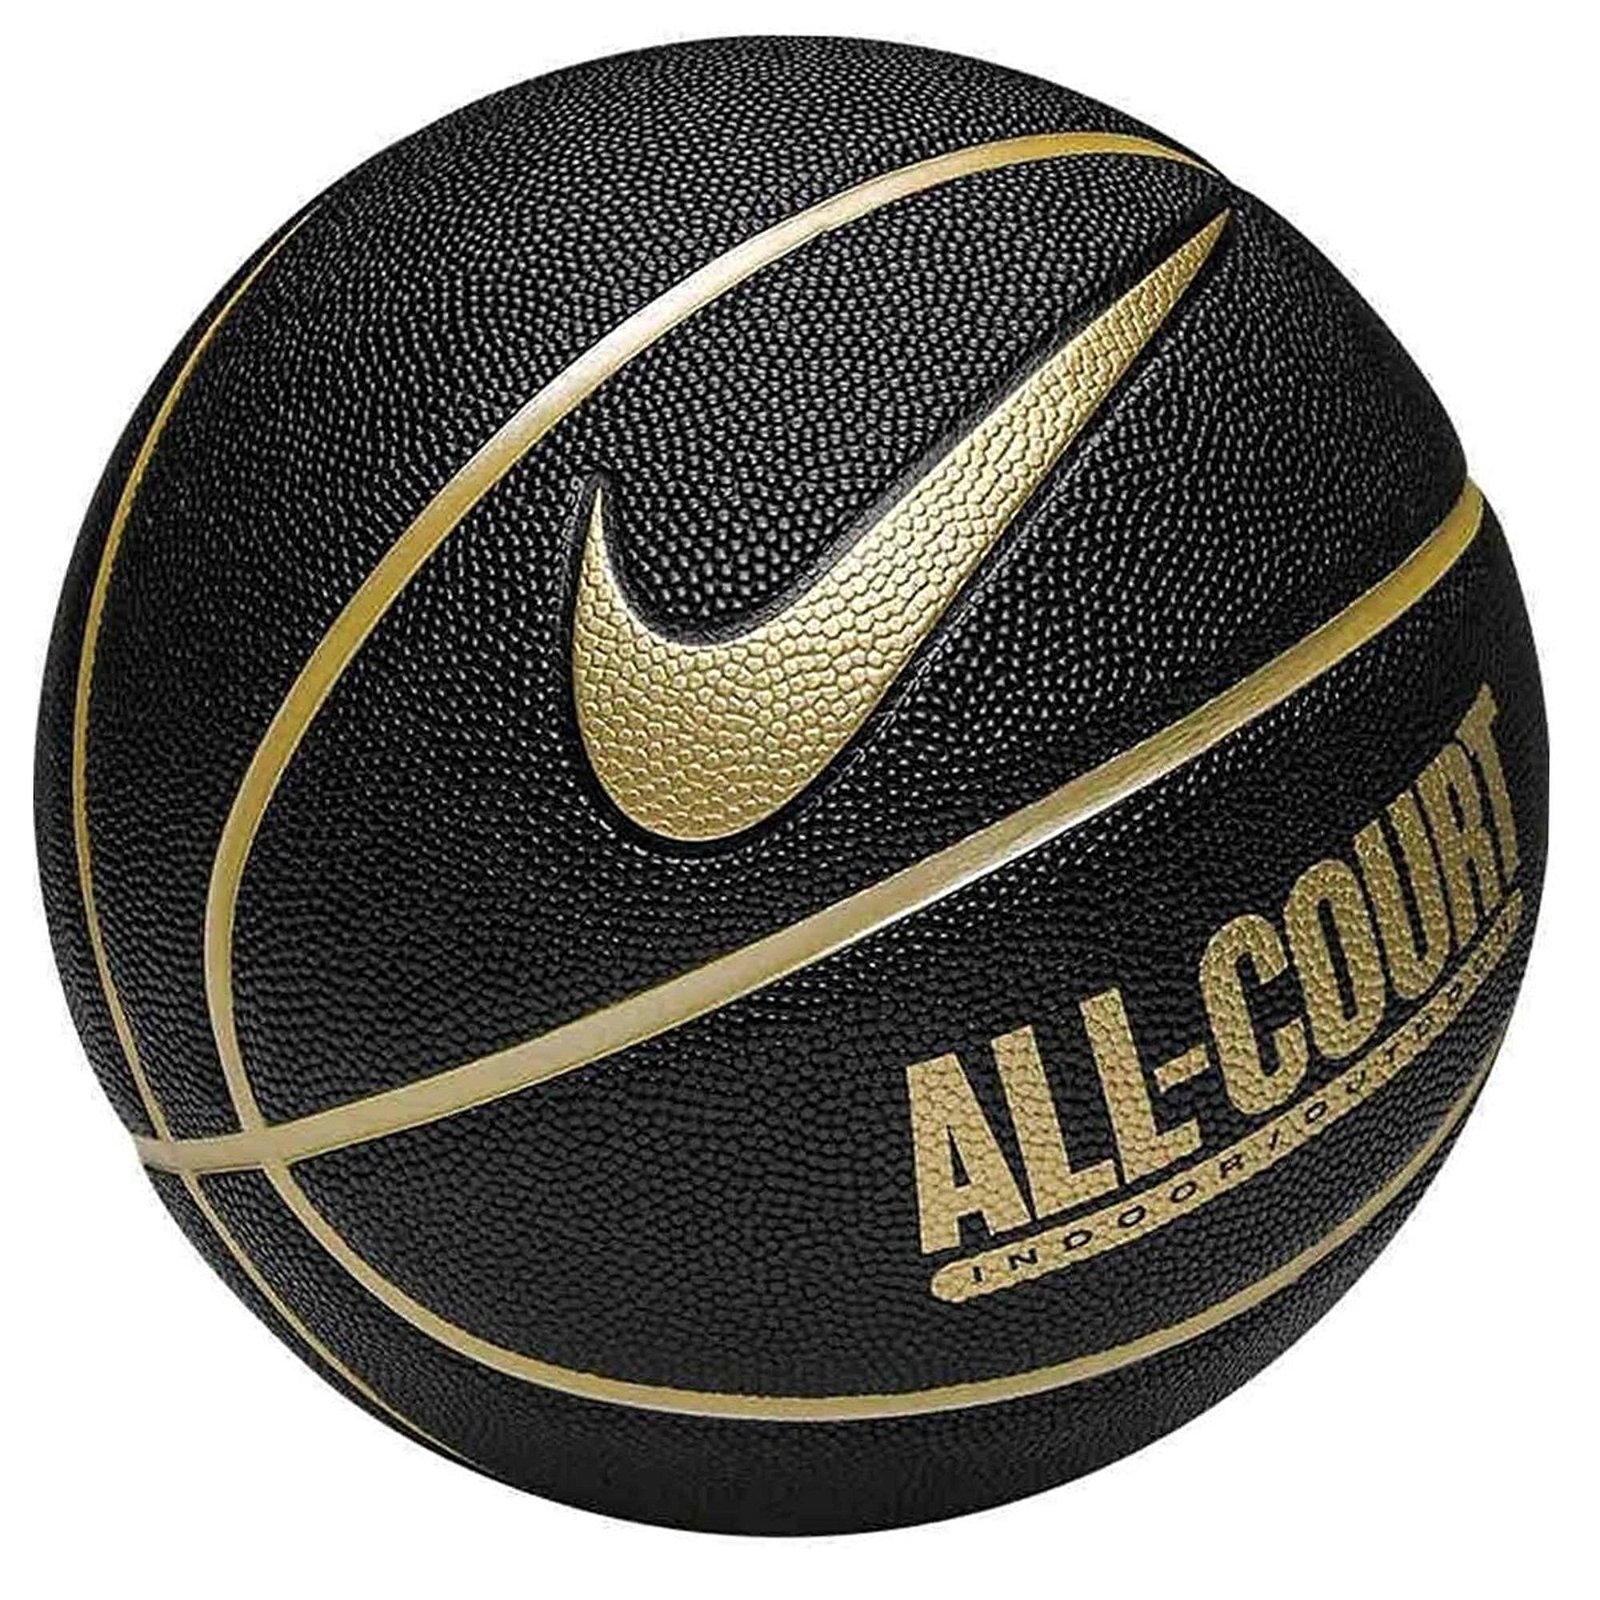 Everyday All Court 8P Unisex Siyah Basketbol Topu N.100.4369.070.07